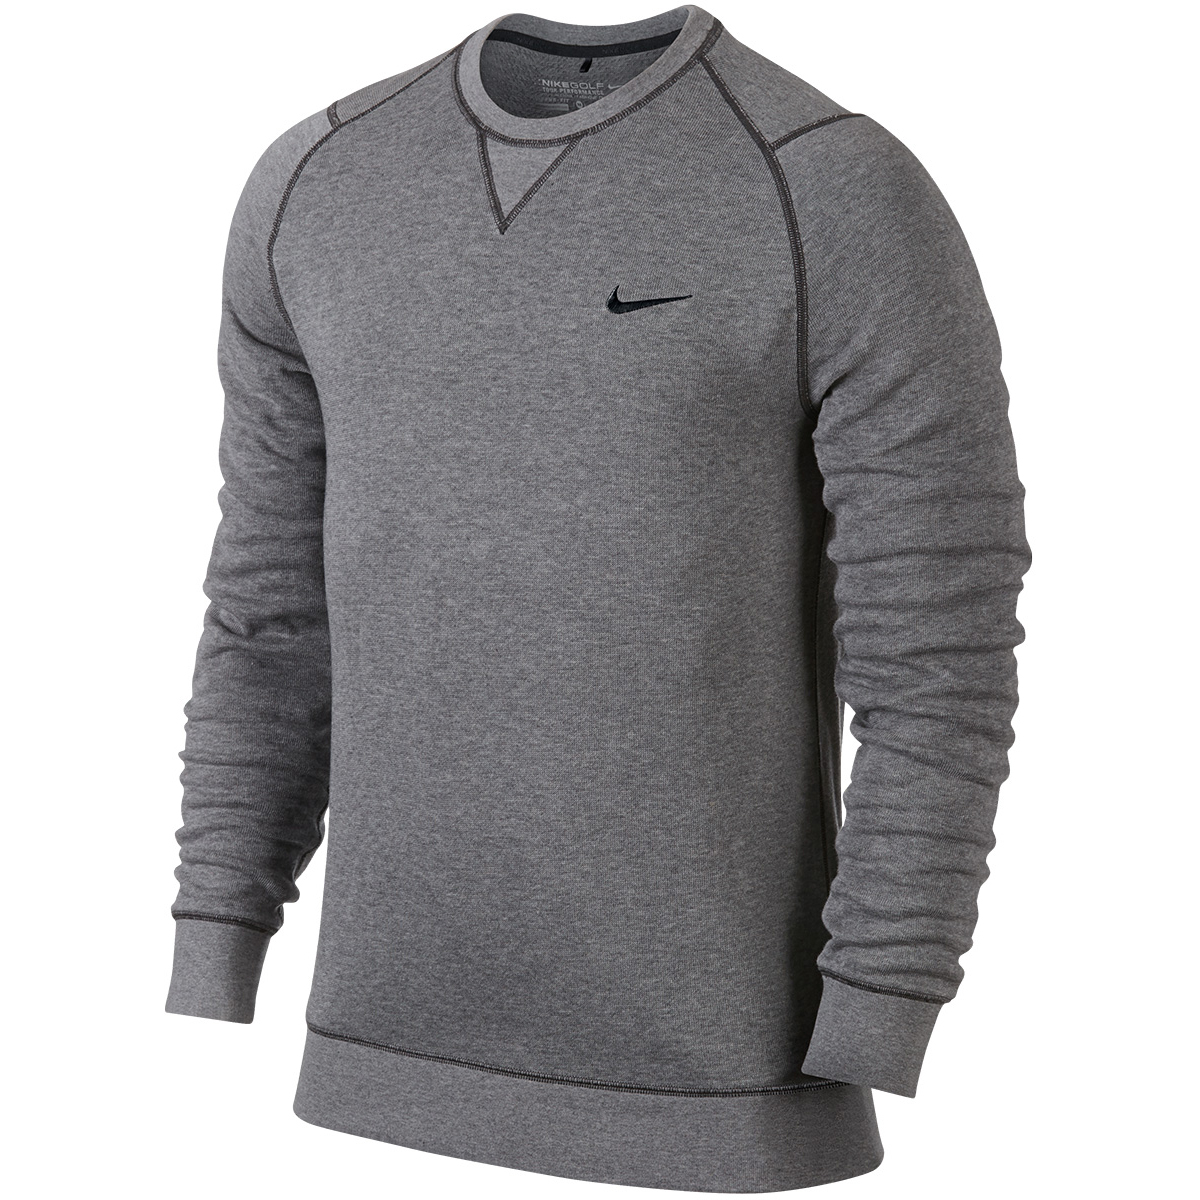 Nike Golf Range Crew Sweater | Online Golf